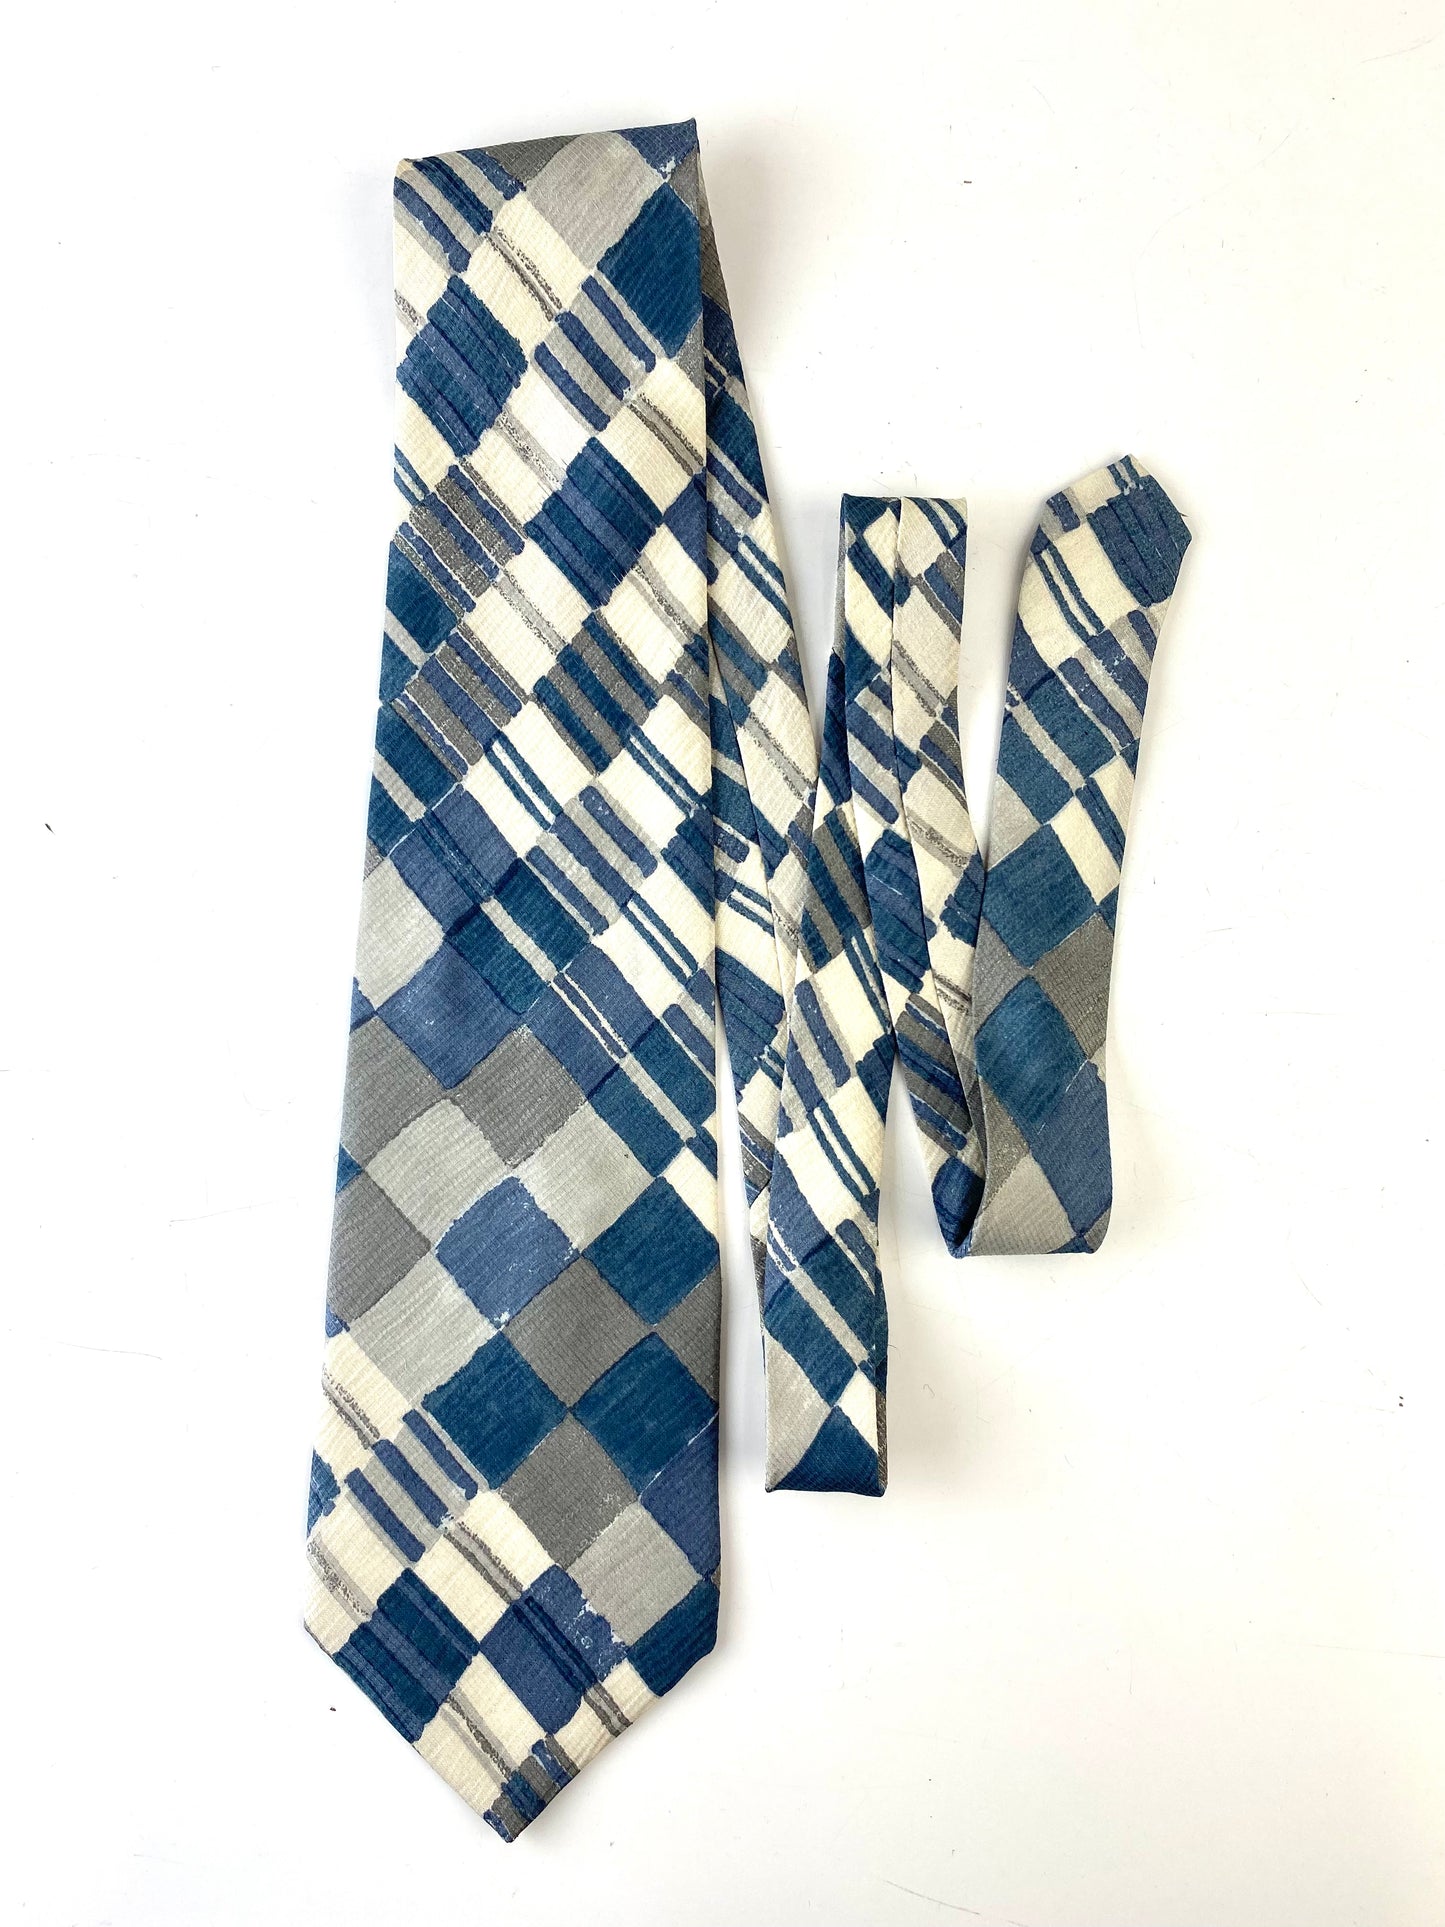 90s Deadstock Silk Necktie, Men's Vintage Blue/ Grey/ Cream Check Pattern Tie, NOS